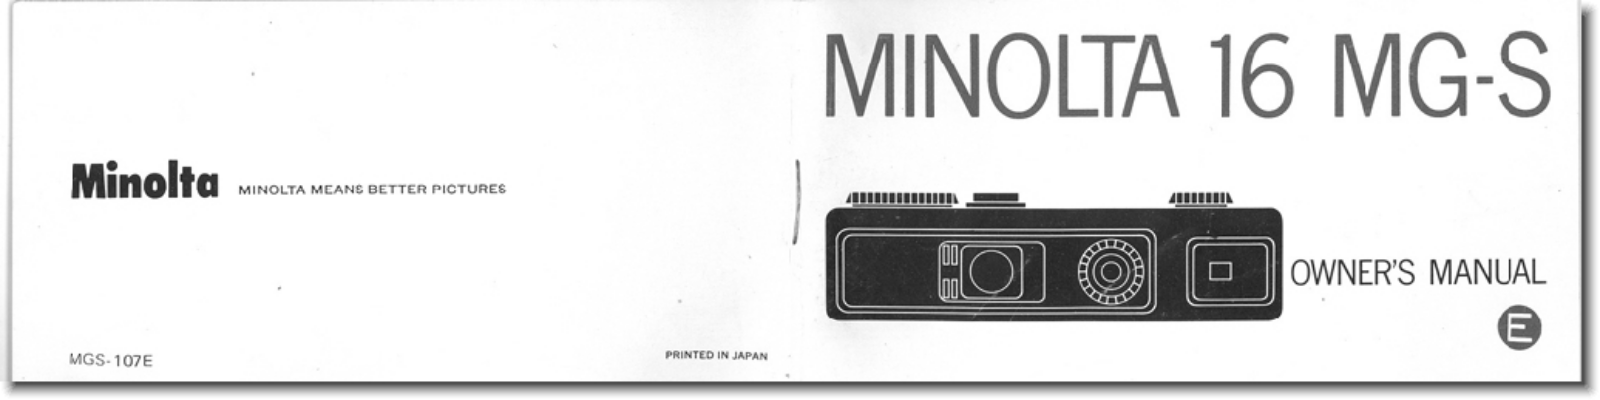 MINOLTA 16 MG-S Owner's Manual